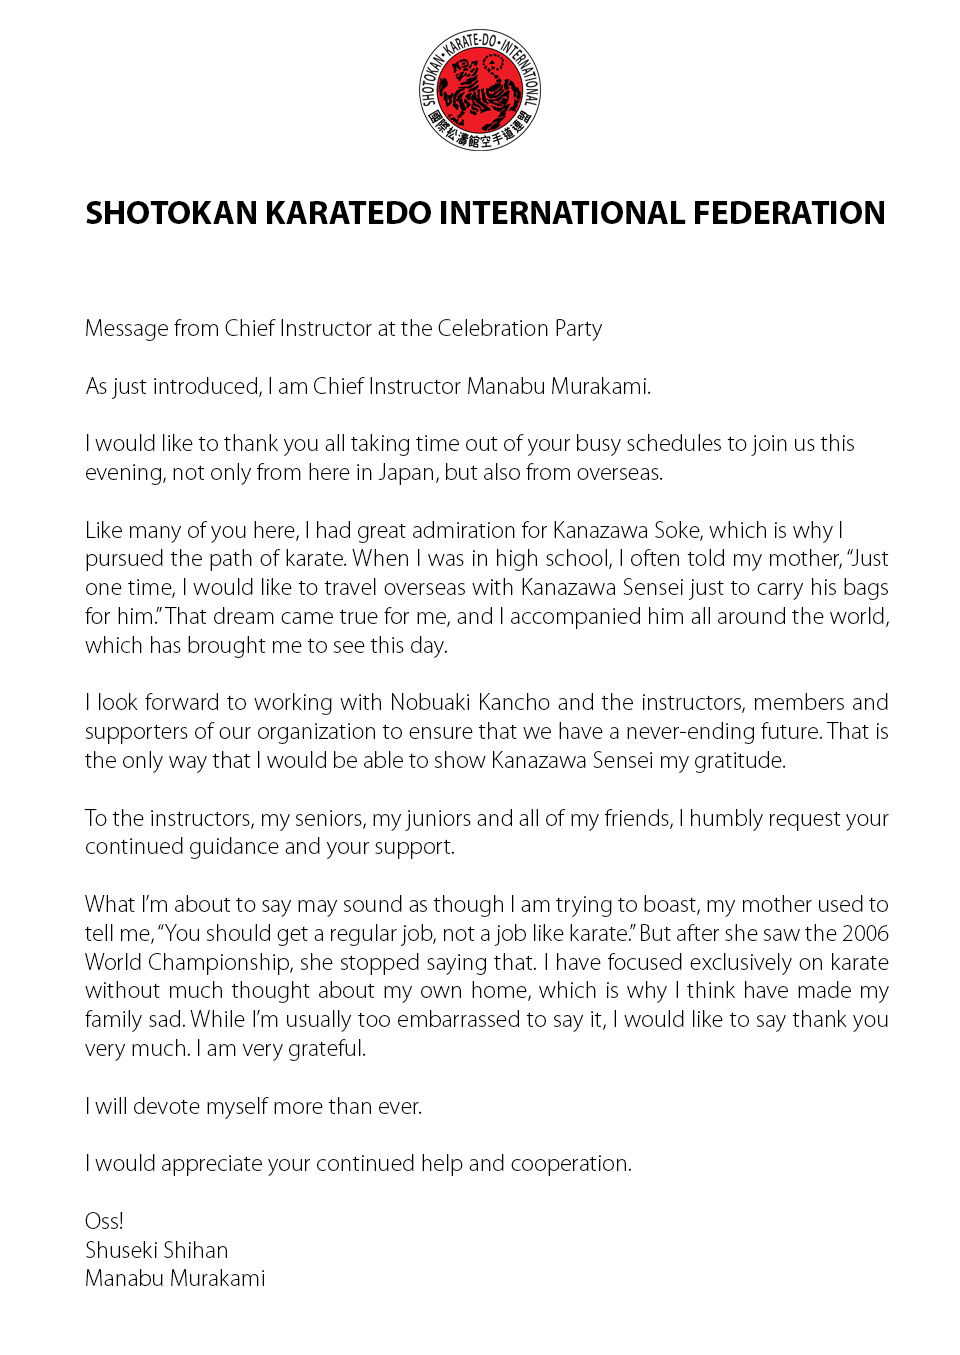 Letter from Shuseki Shihan Manabu Murakami